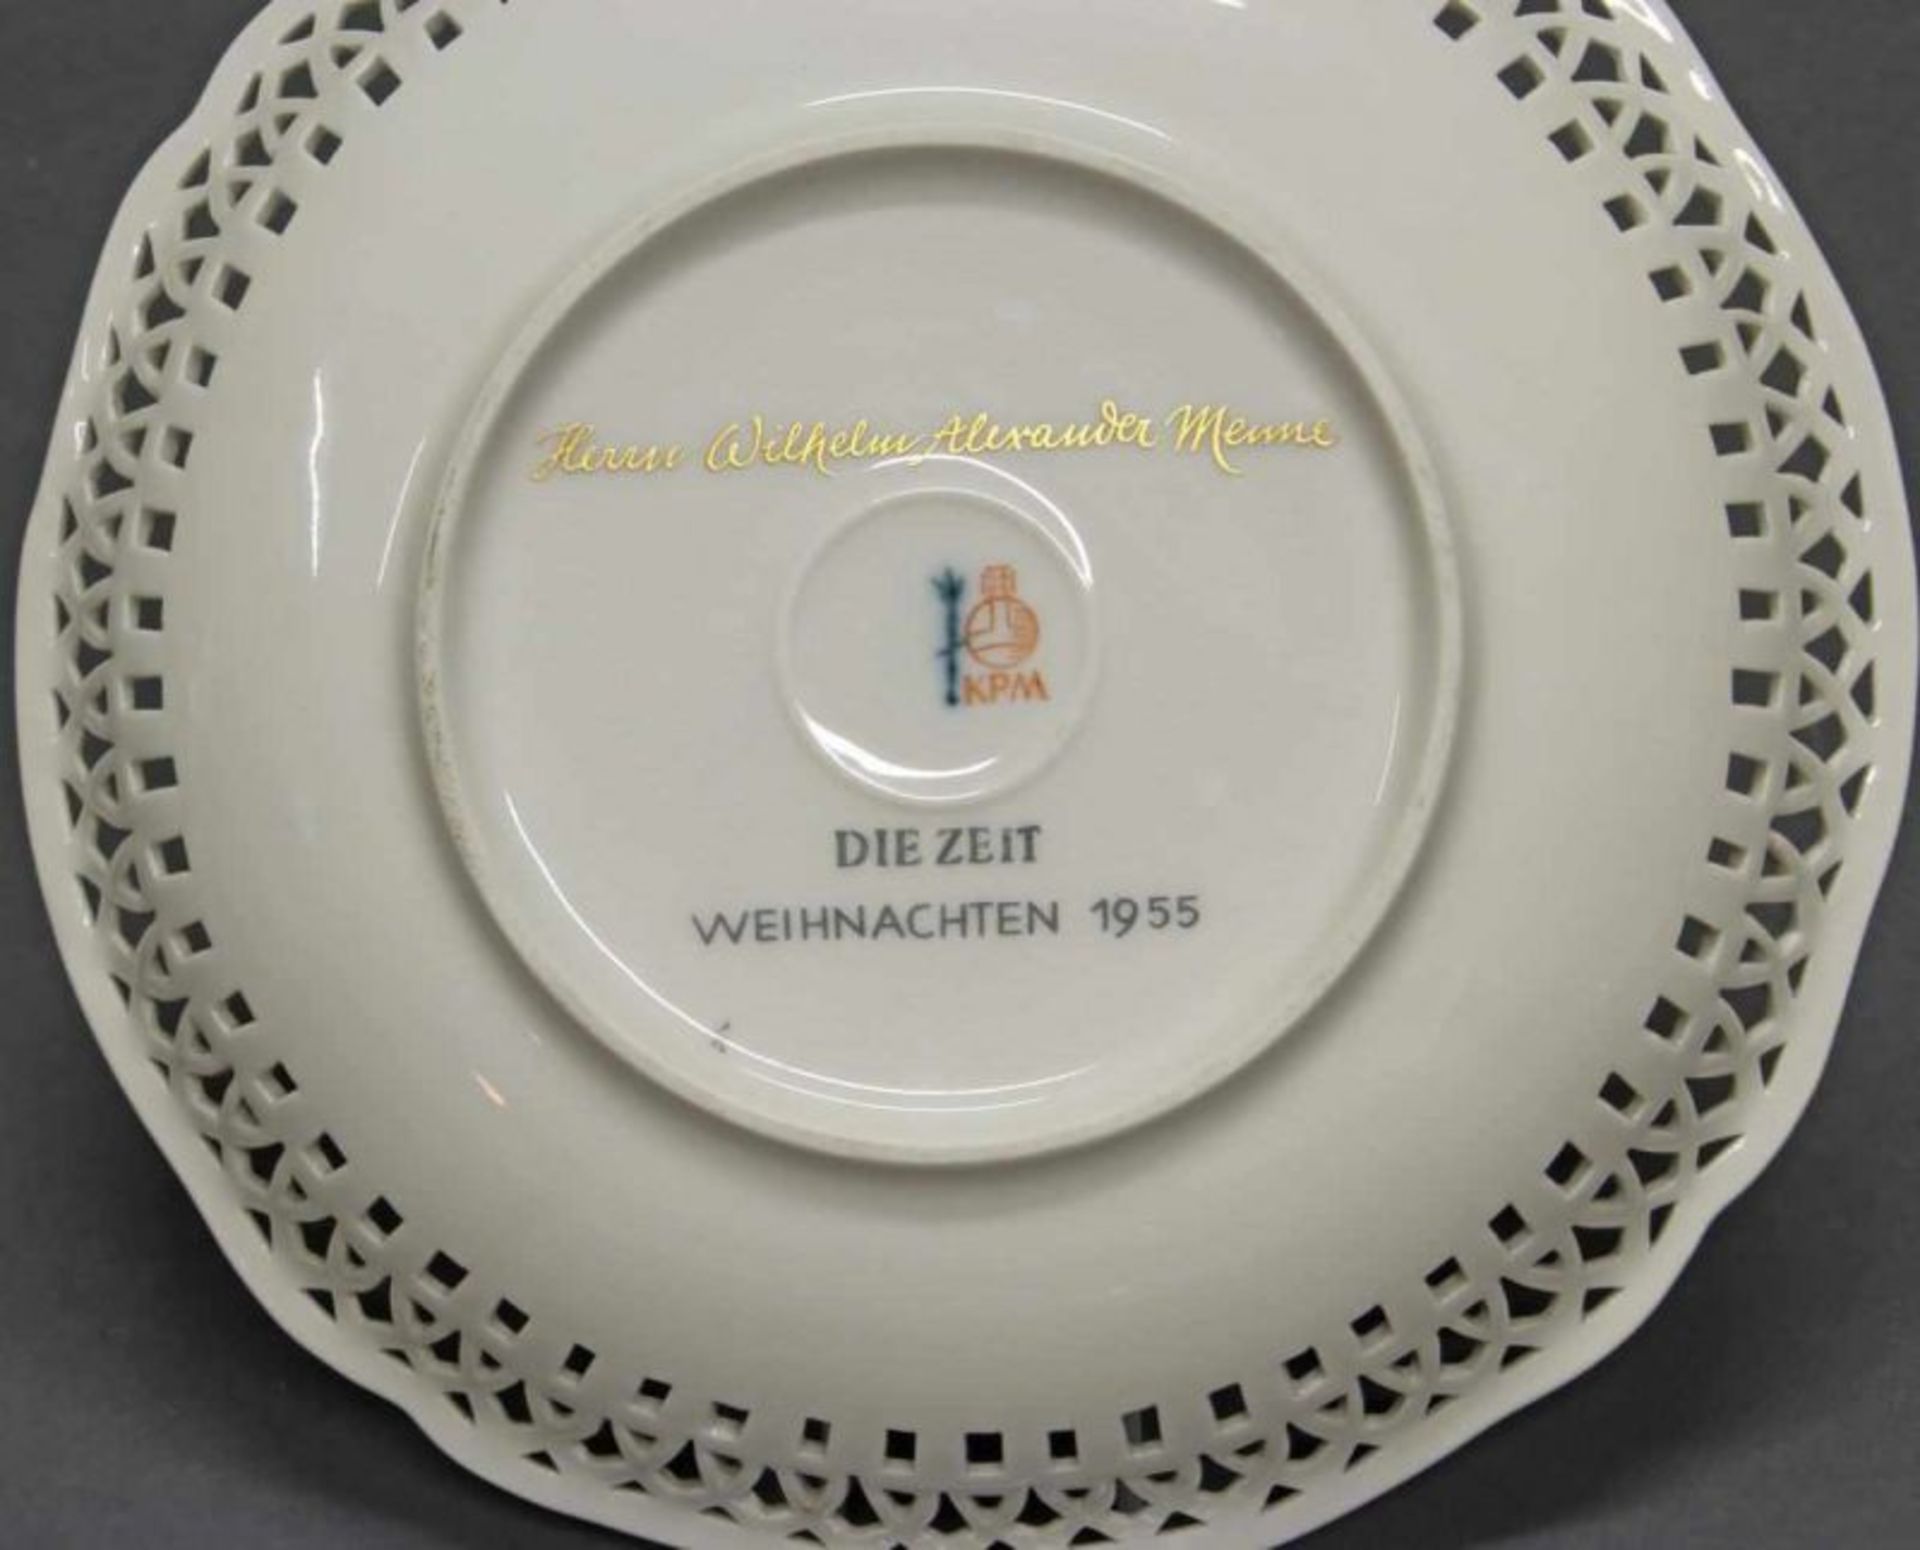 Englischer Korb, 2 Korbschalen, Durchbruchteller, Doppelschale, KPM Berlin, 1950/60er Jahre, bunte - Image 2 of 2